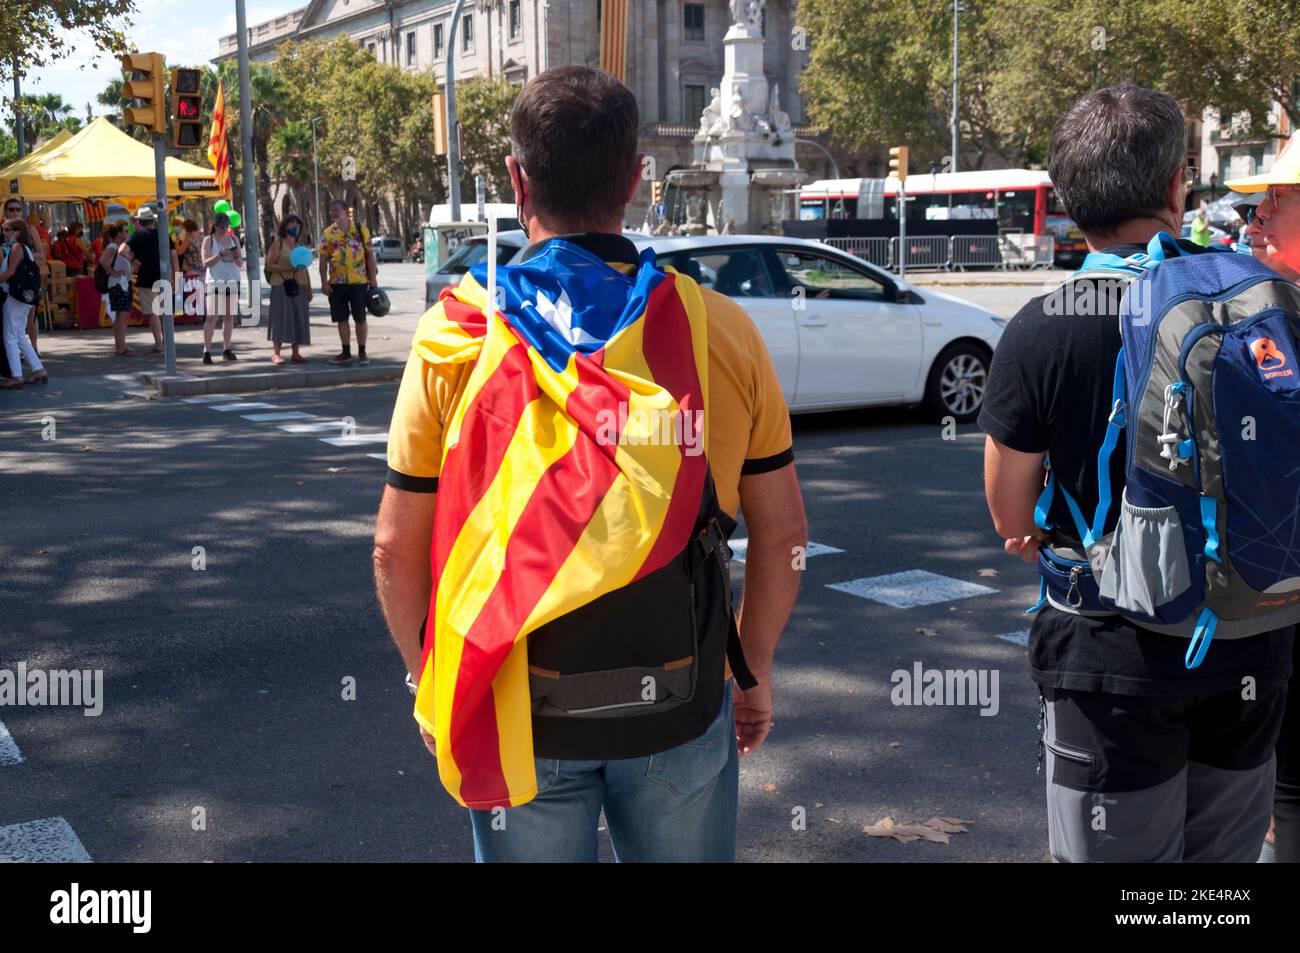 11 September 2020, Man with the separatist catalan flag wearing the estelada, as a cape, Diada, catalan festivity in Barcelona, Catalonia, Spain Stock Photo